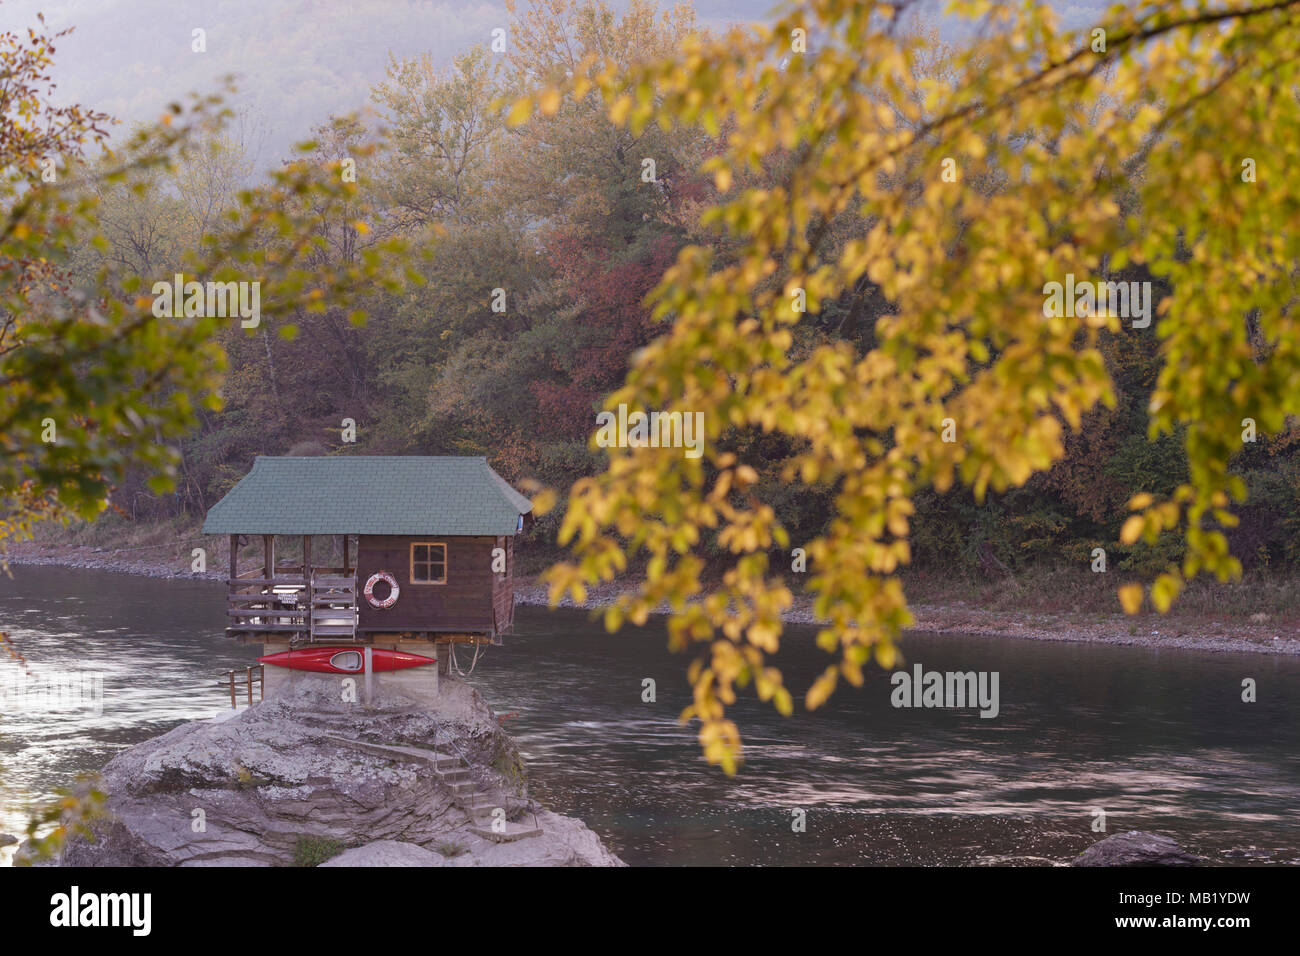 The house on the River Drina, with Autumn leaf colour, Bajina Basta, Serbia, October Stock Photo